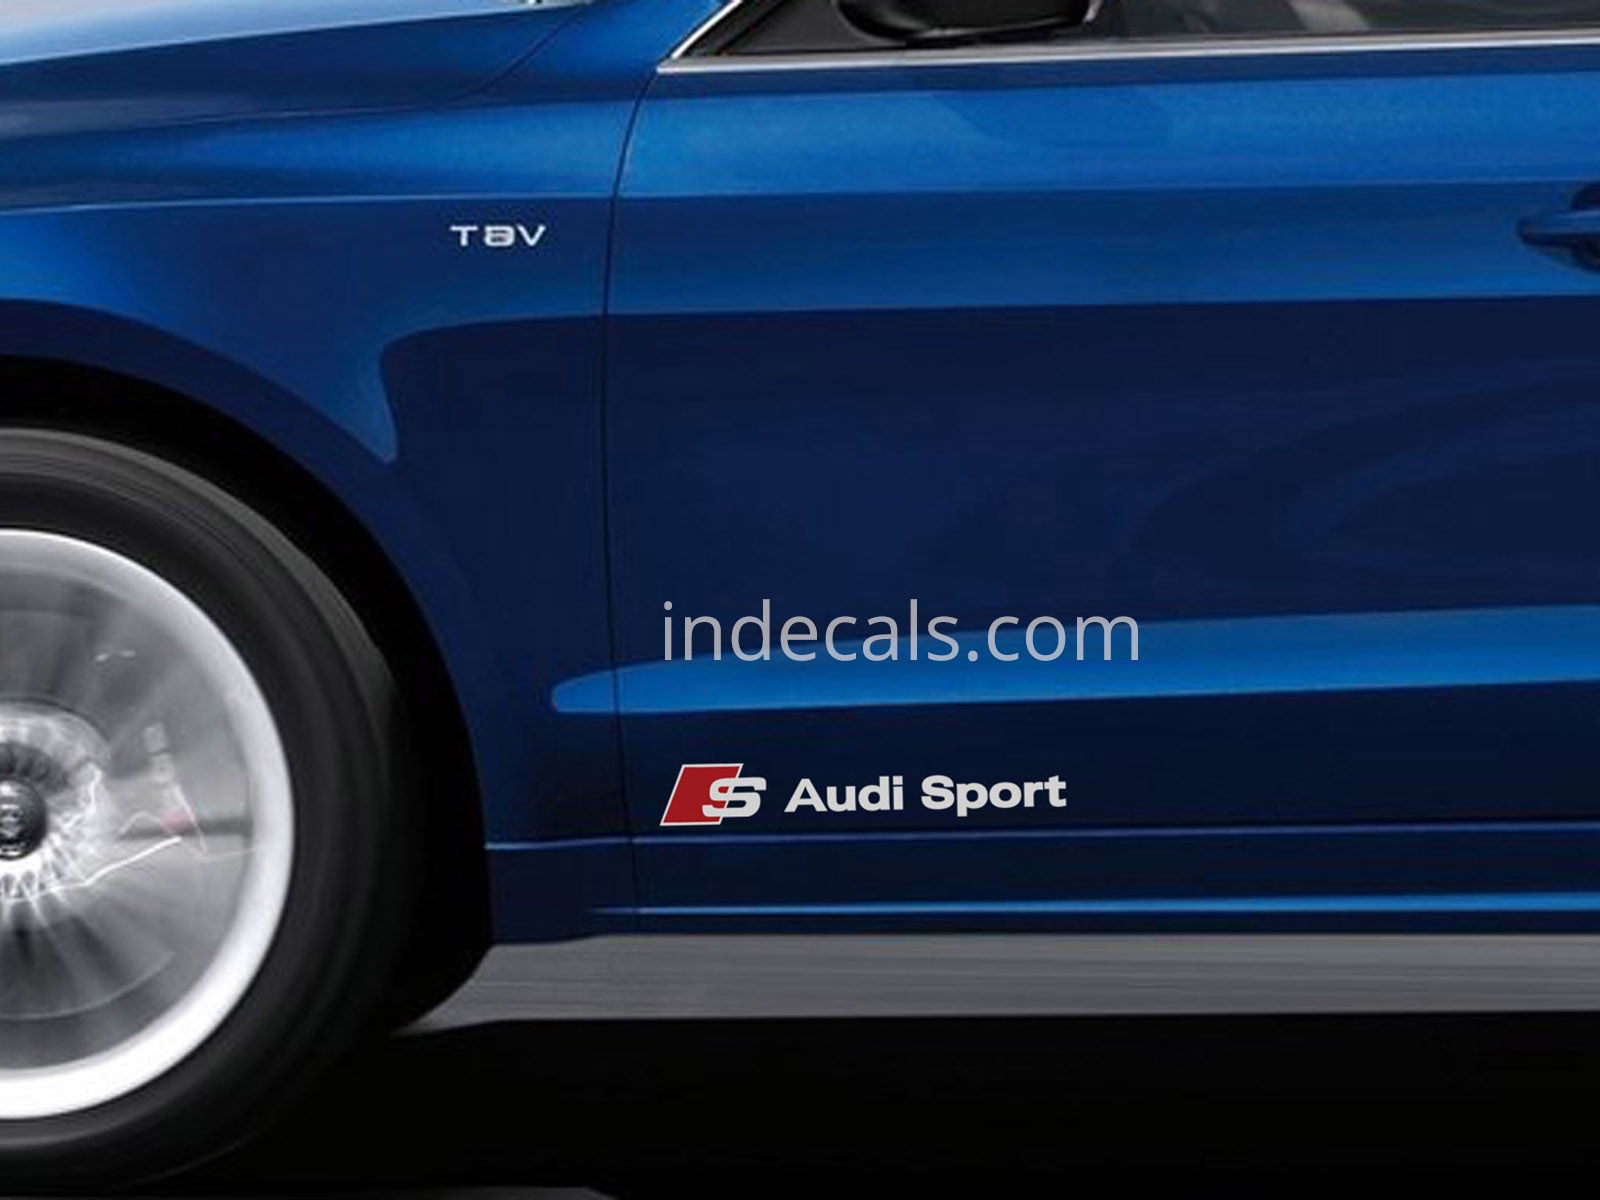 2 x Audi S-line Audi Sport Stickers Medium - Silver + Red